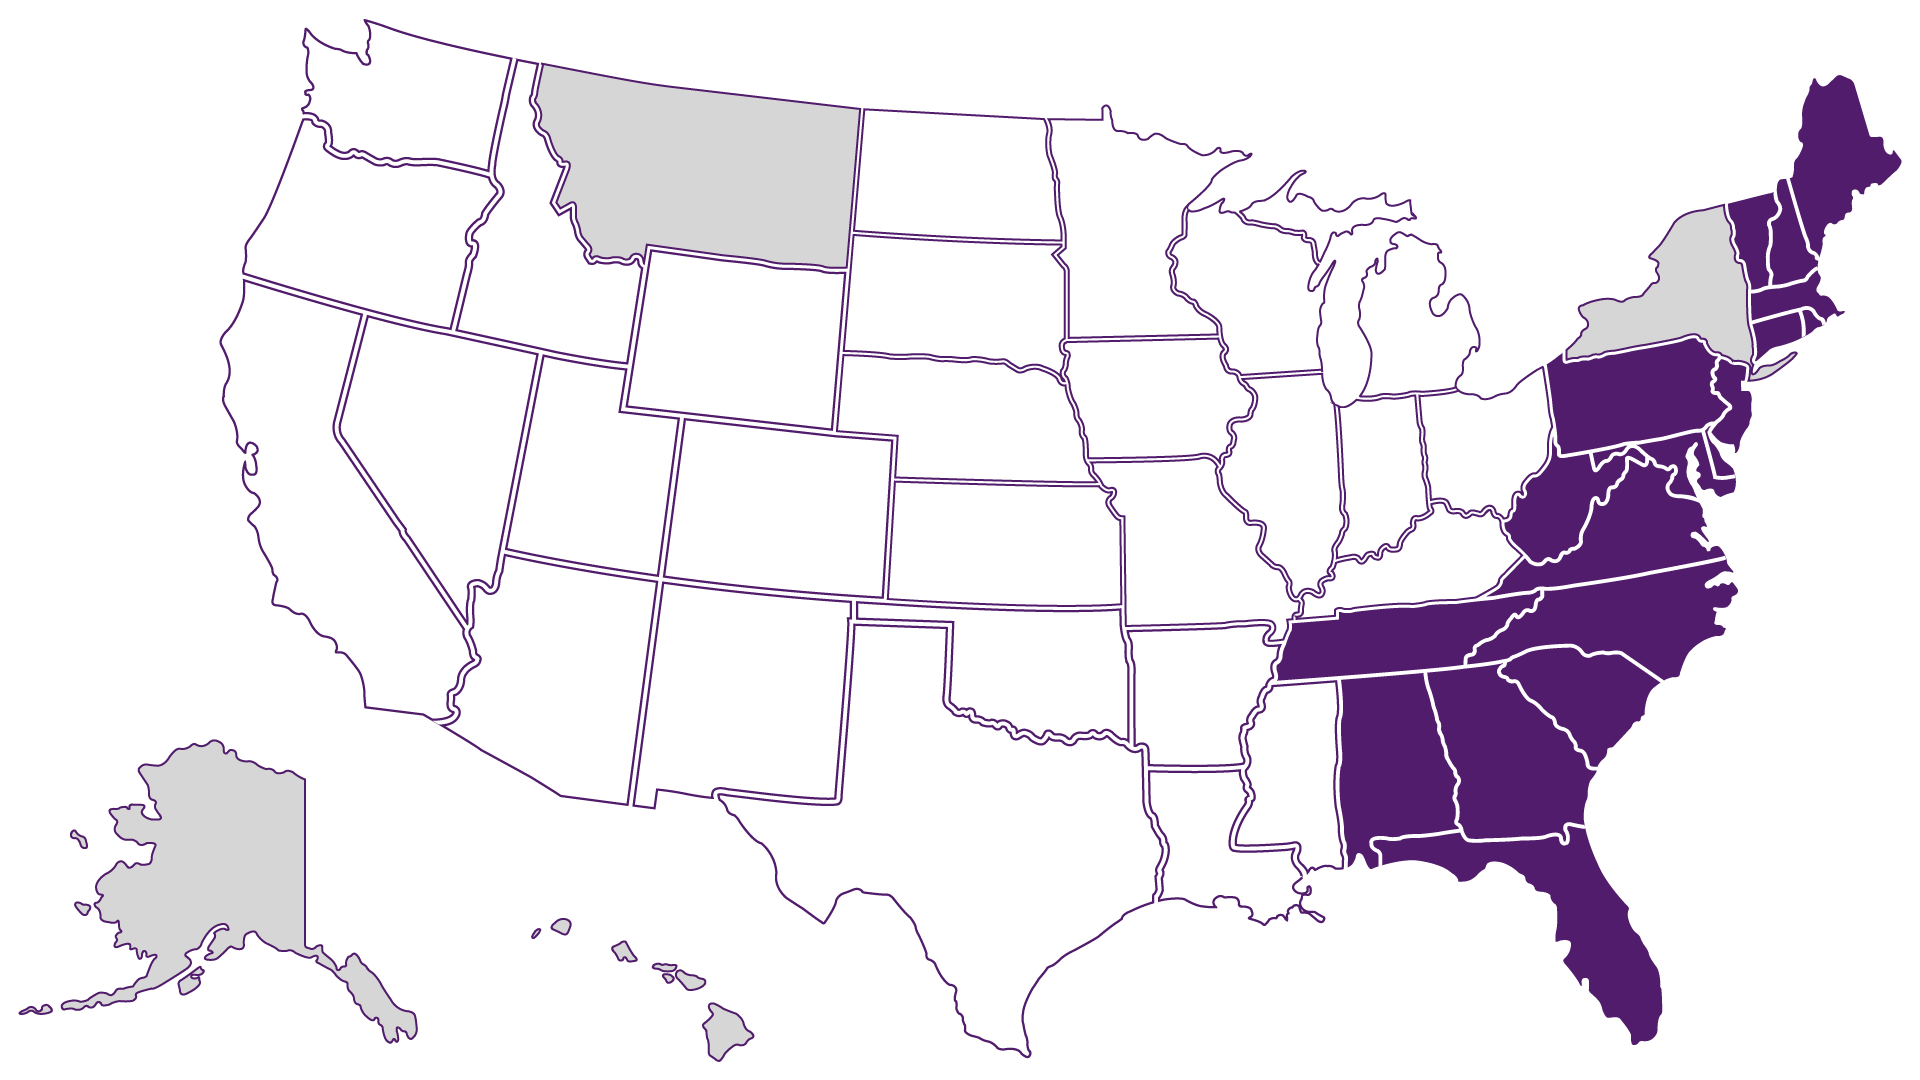 purple graphic of United States Eastern region